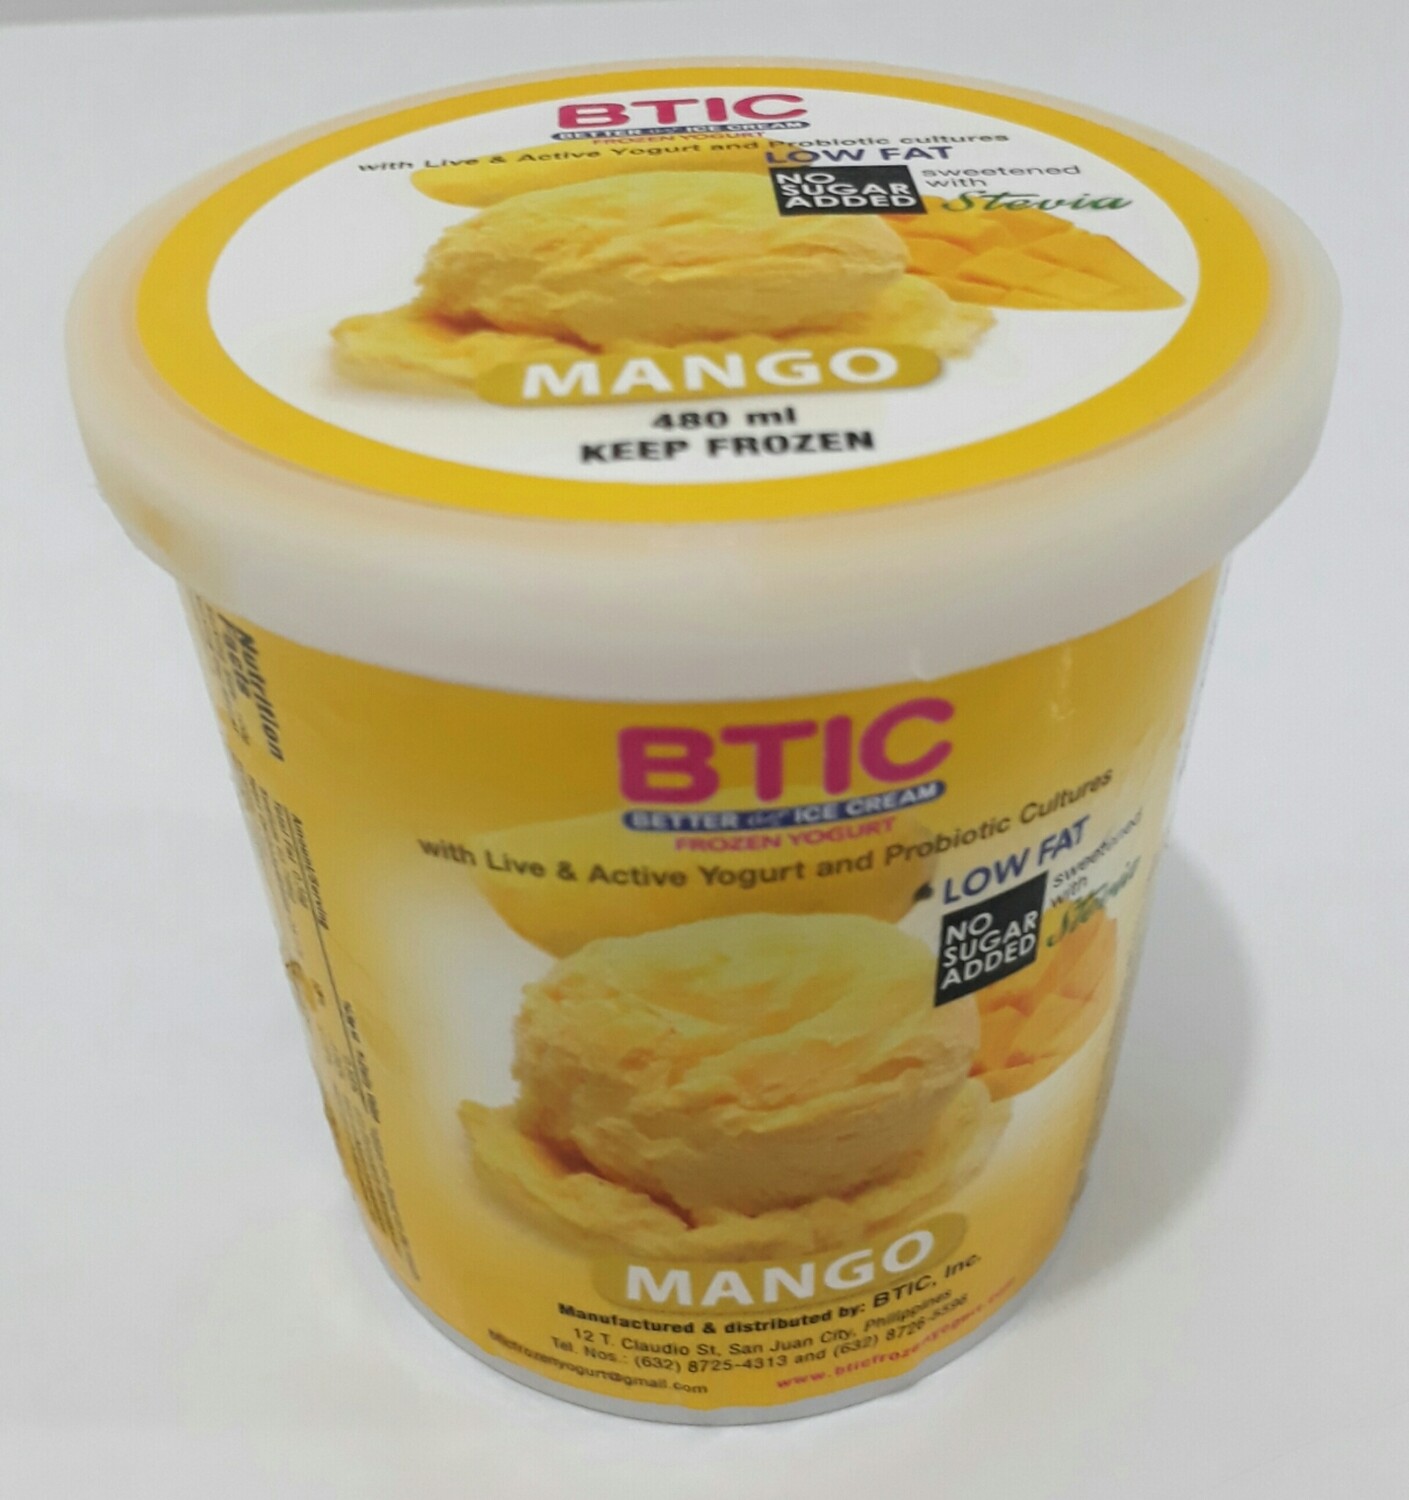 NO SUGAR MANGO Yogurt Ice Cream 480ml